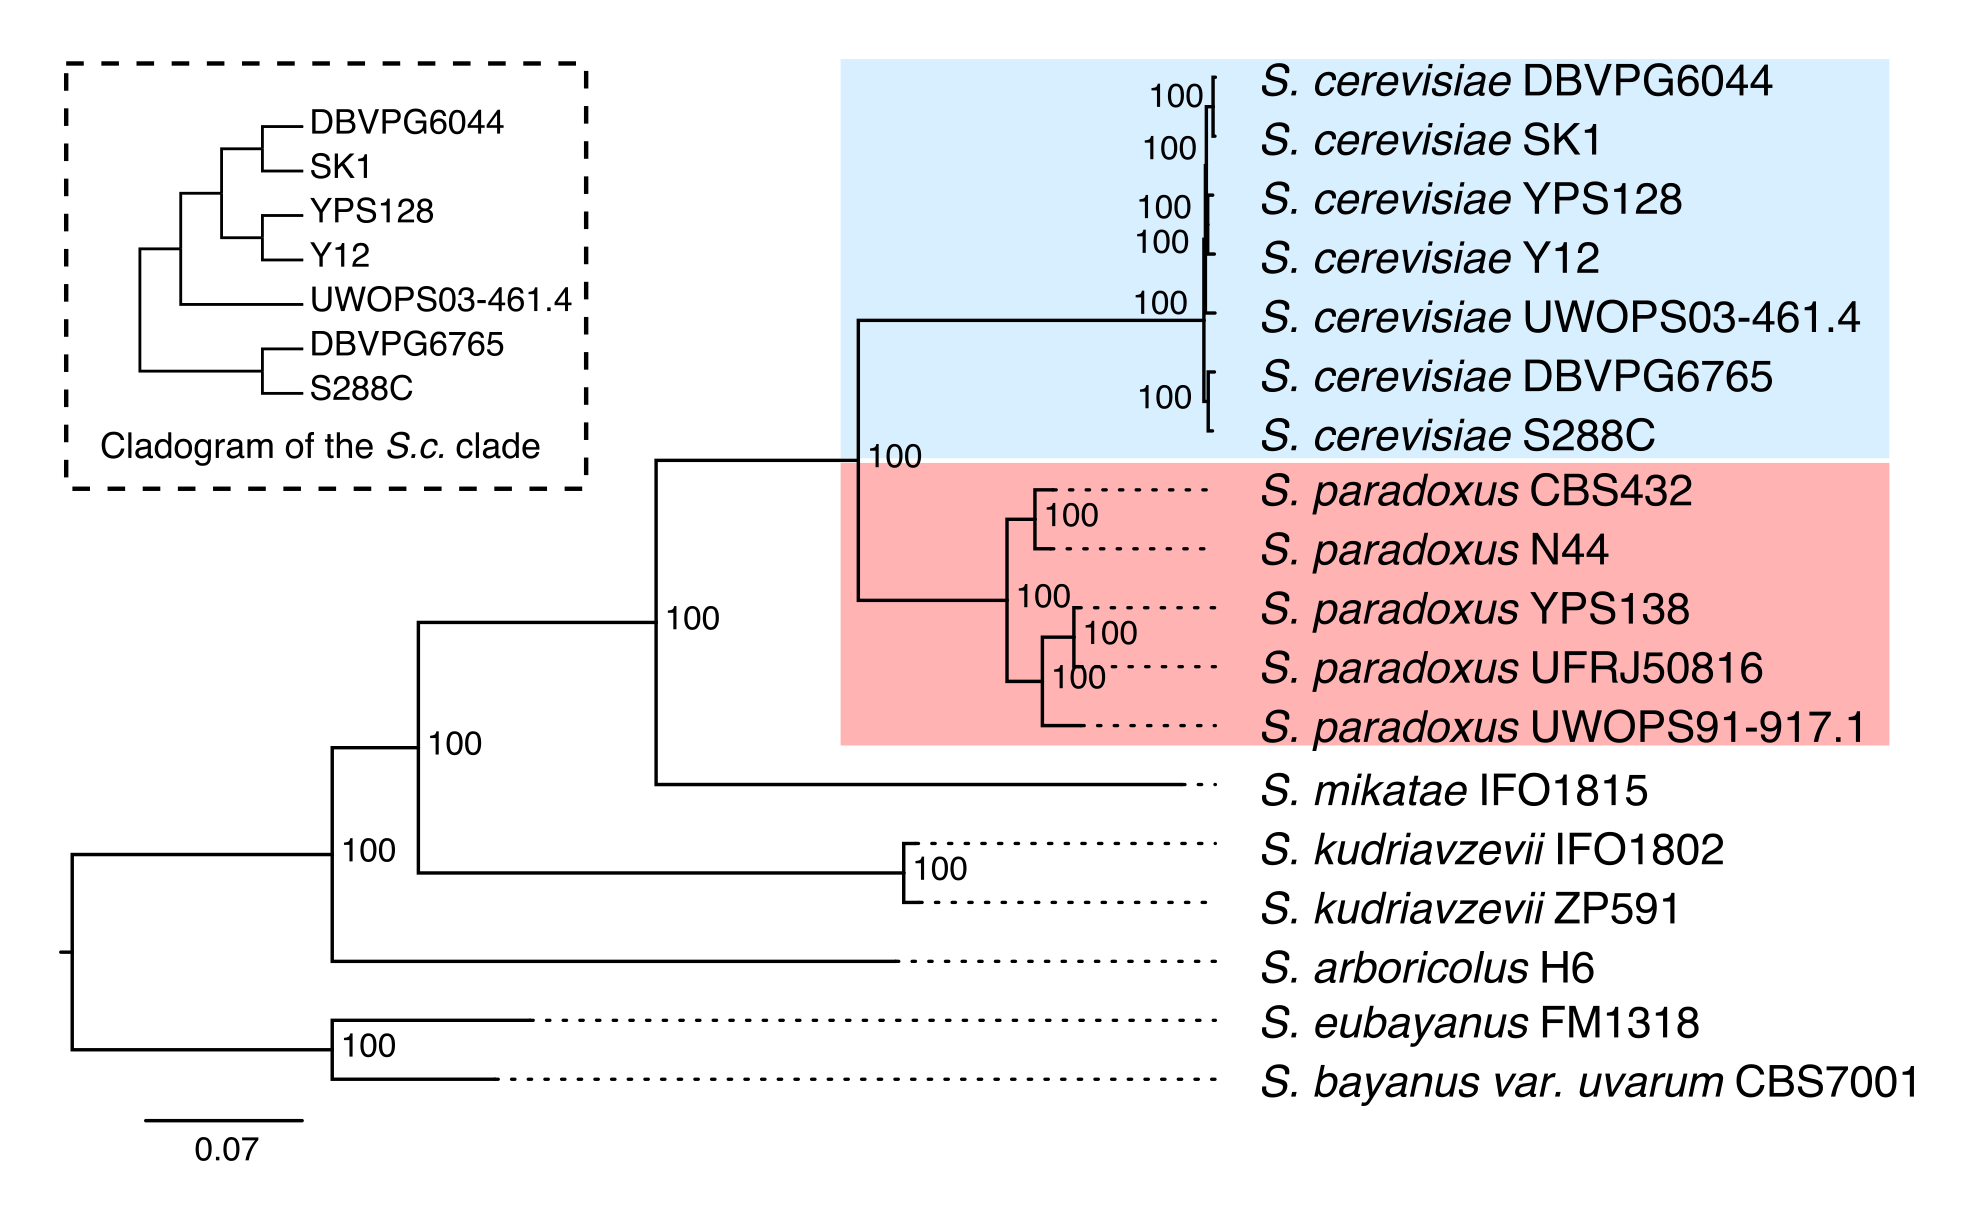 phylogeny of sampled strains